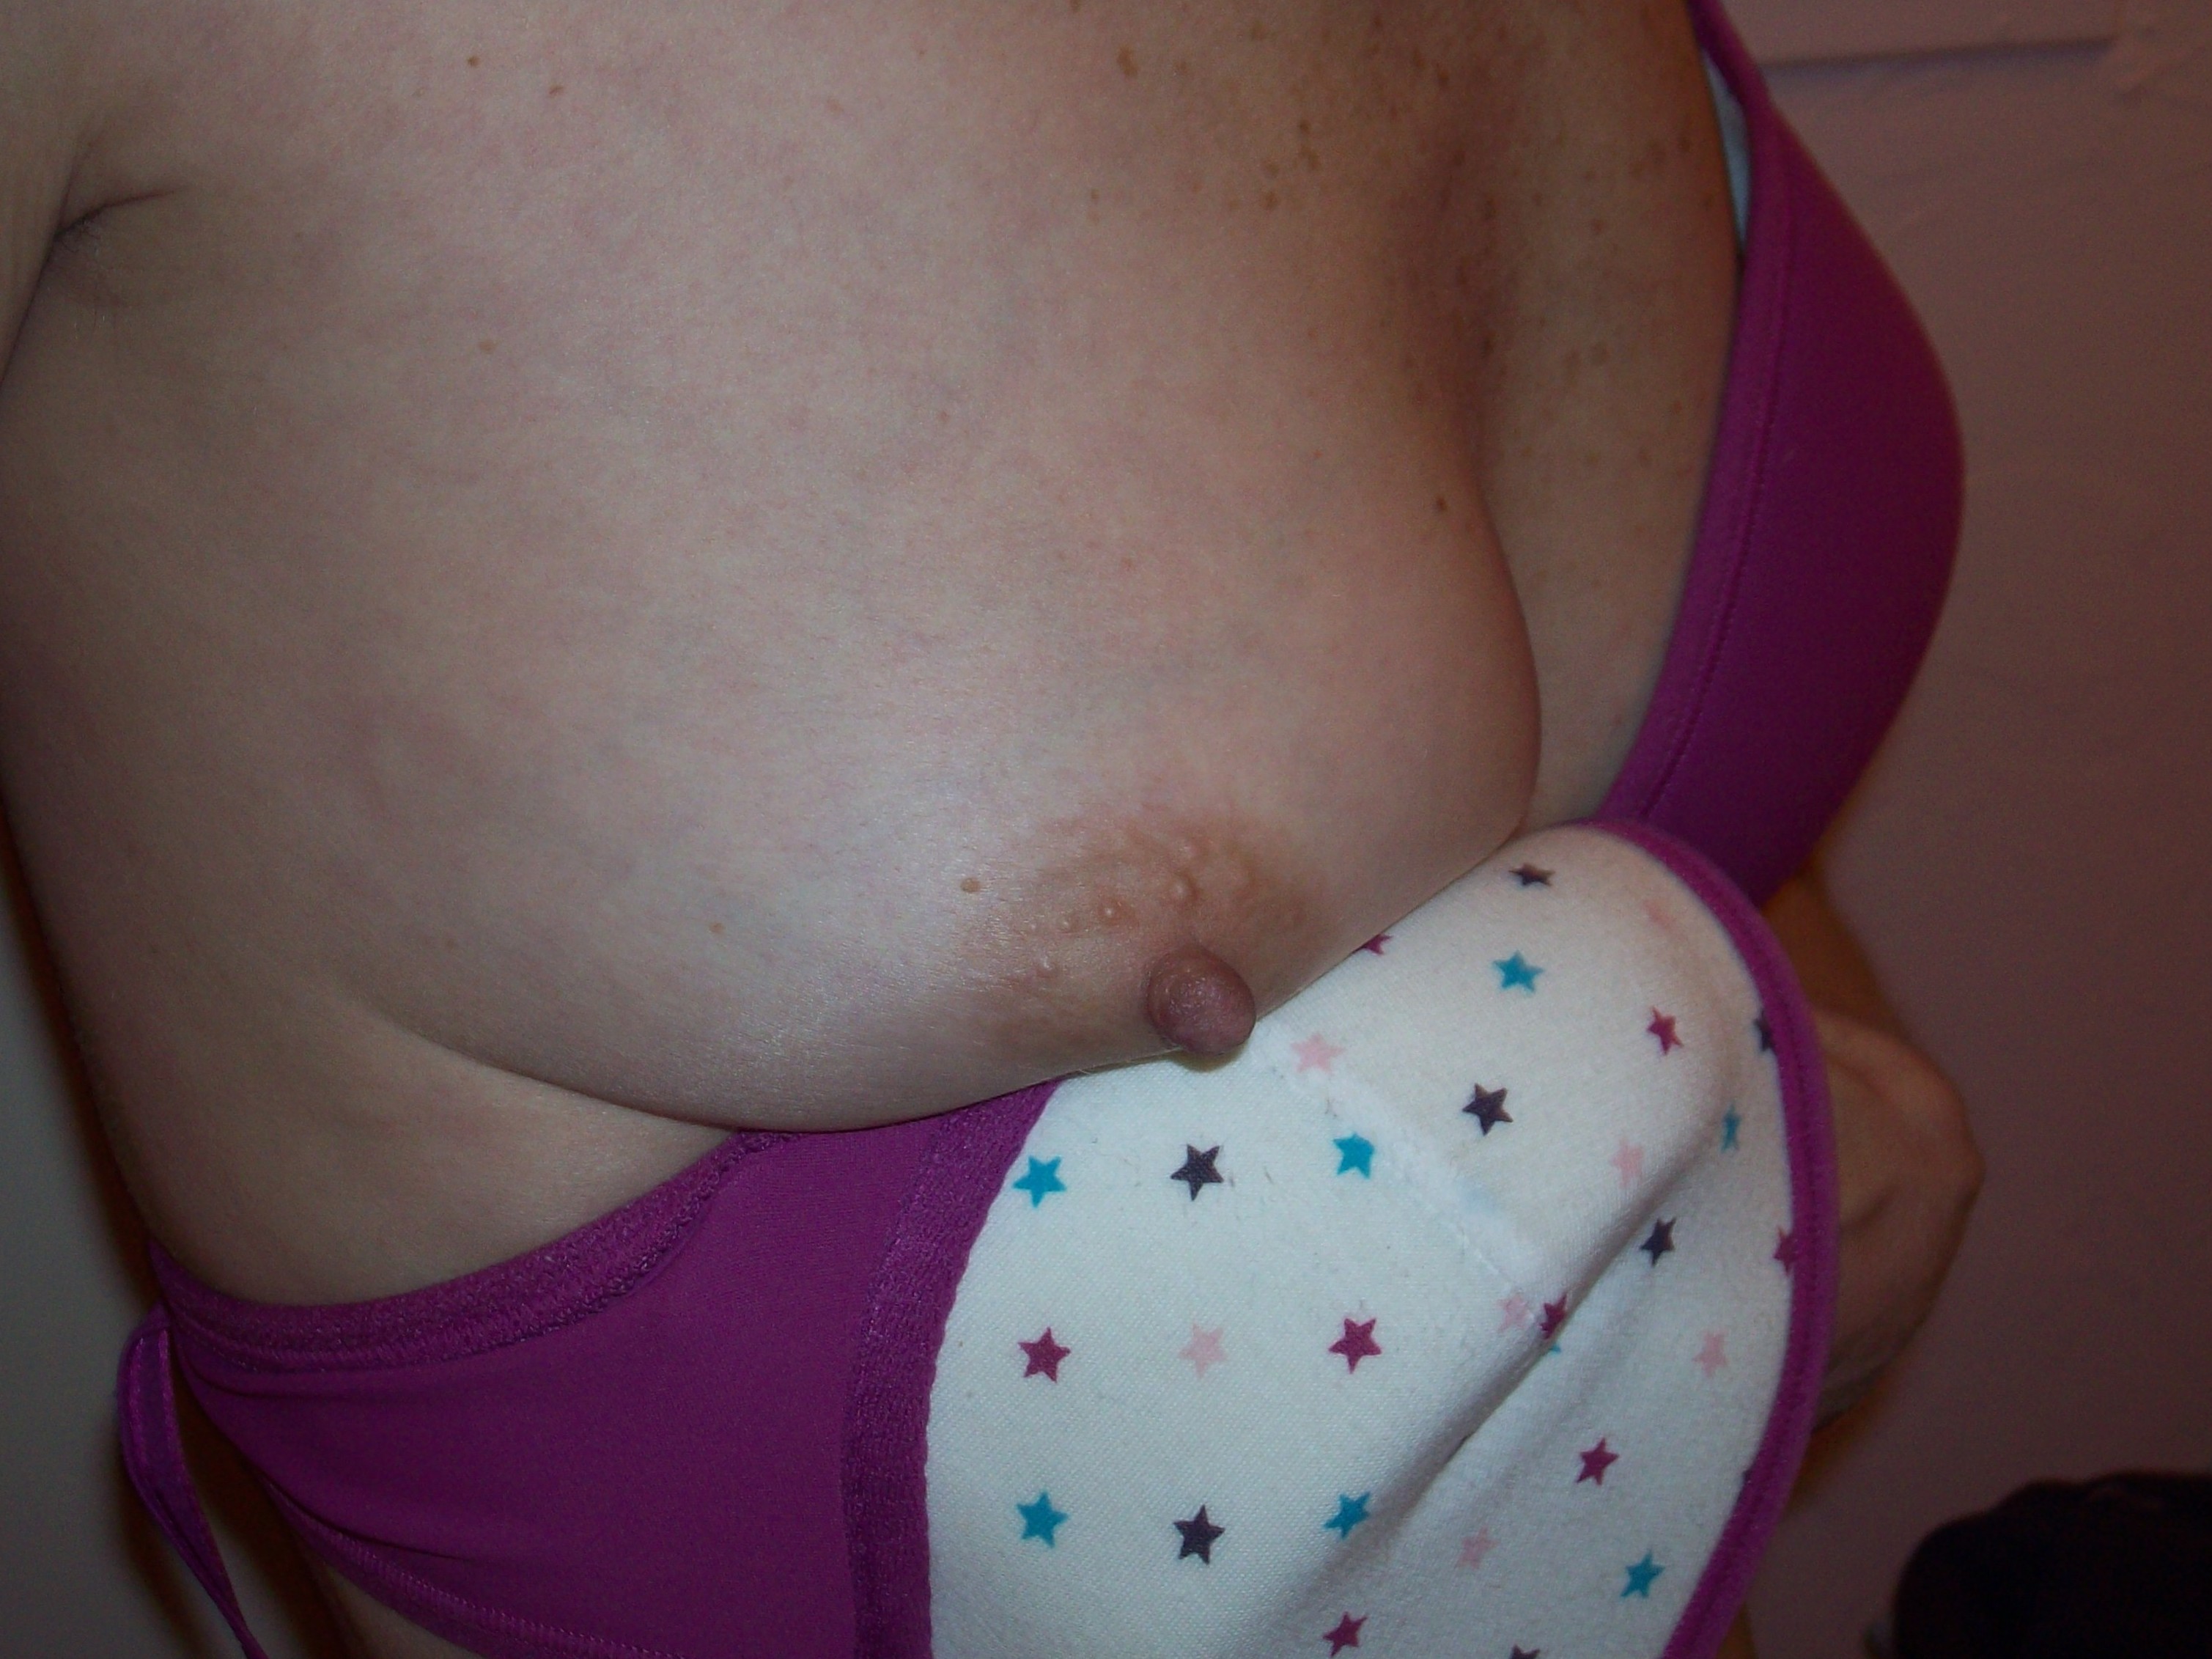 Breast and nipple